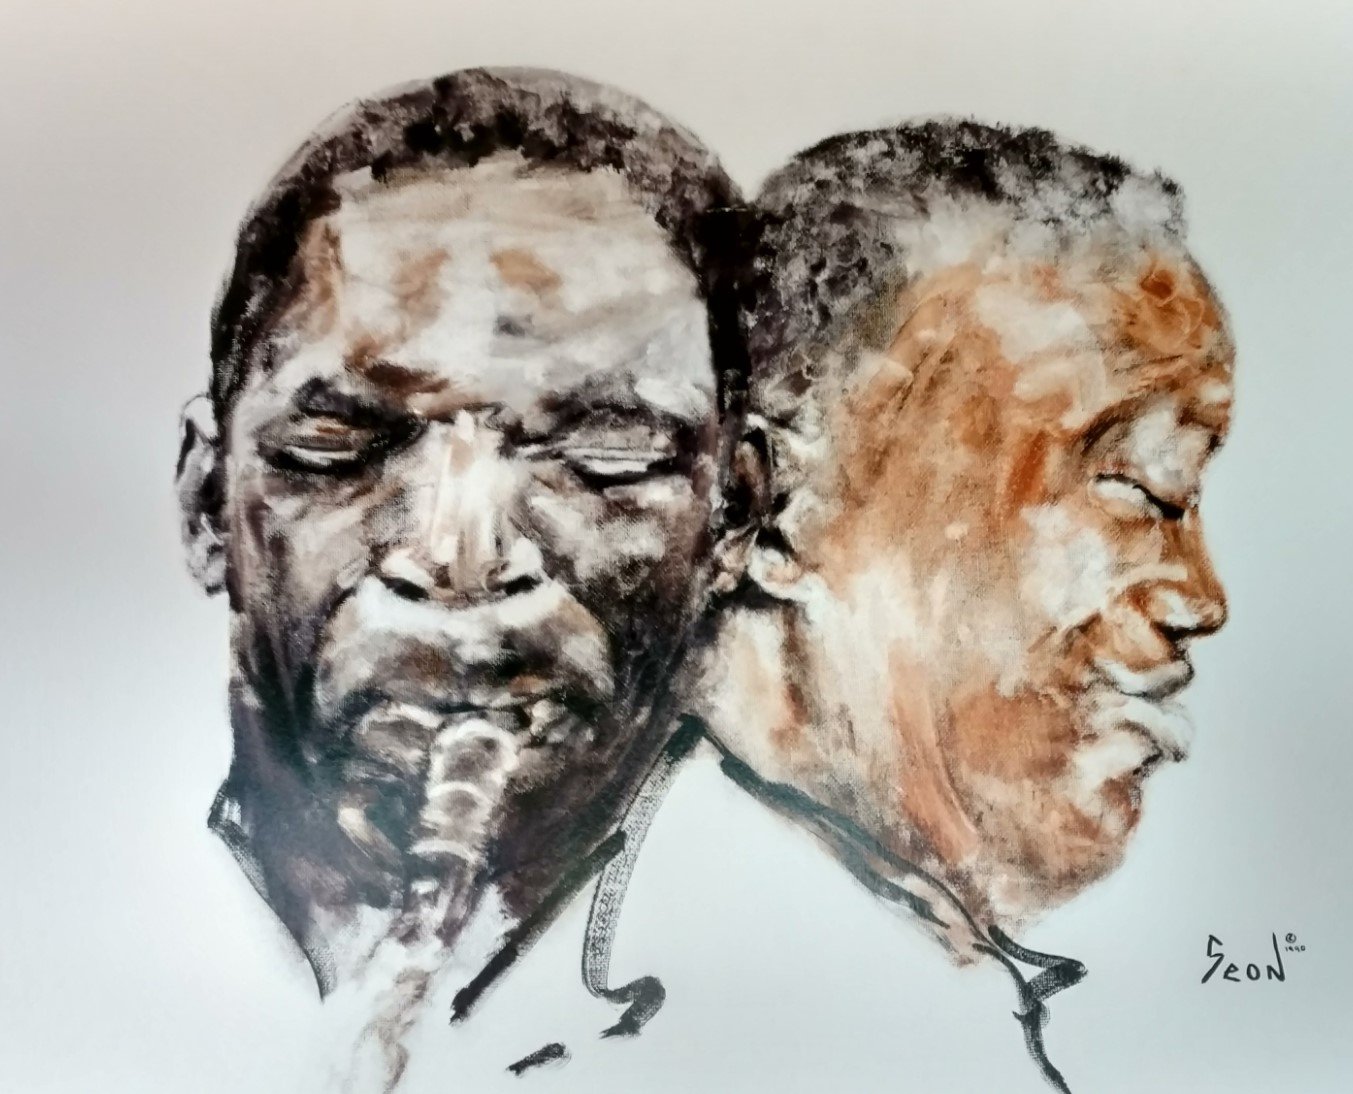 John Coltrane and Accompanist 18" x 24" Lithograph